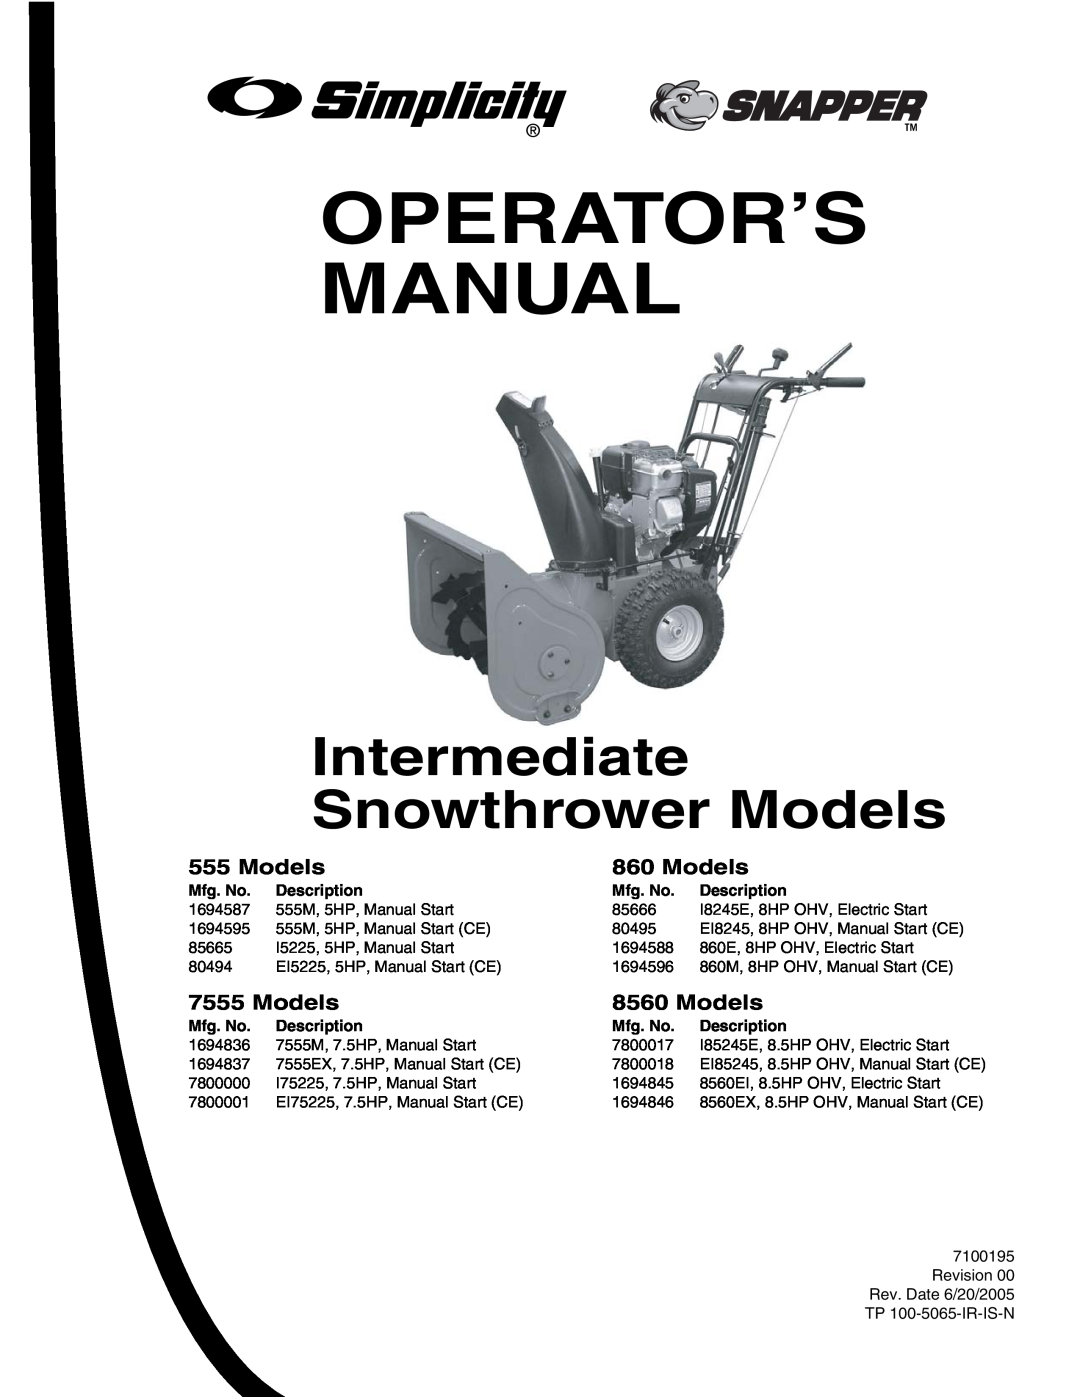 Snapper 860 manual Intermediate Snowthrower Models, Operator’S Manual 